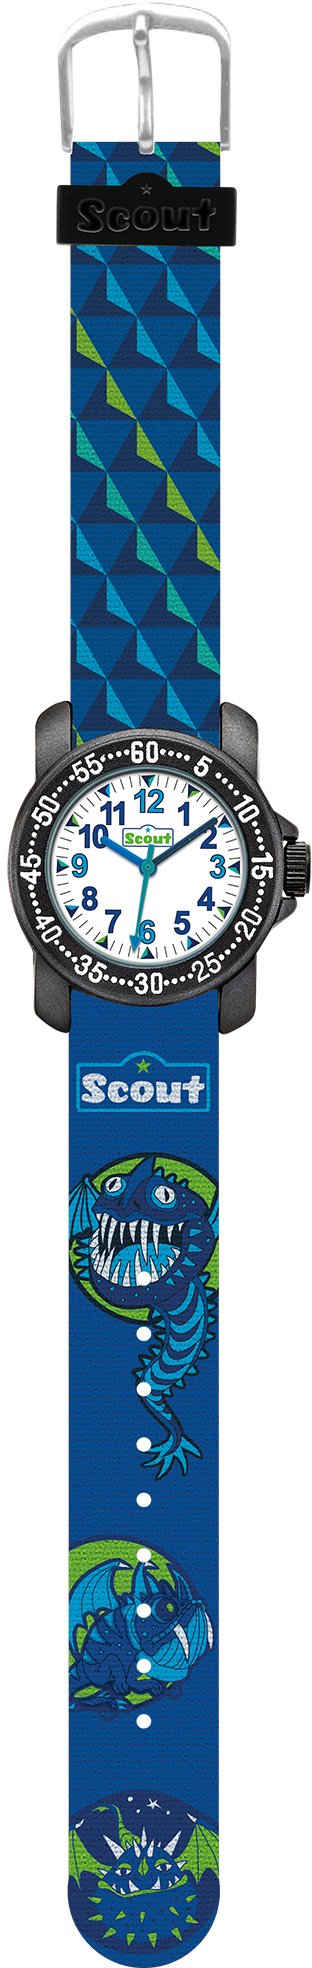 Scout Quarzuhr Action Boxs, 280376015, Lernuhr, ideal auch als Geschenk